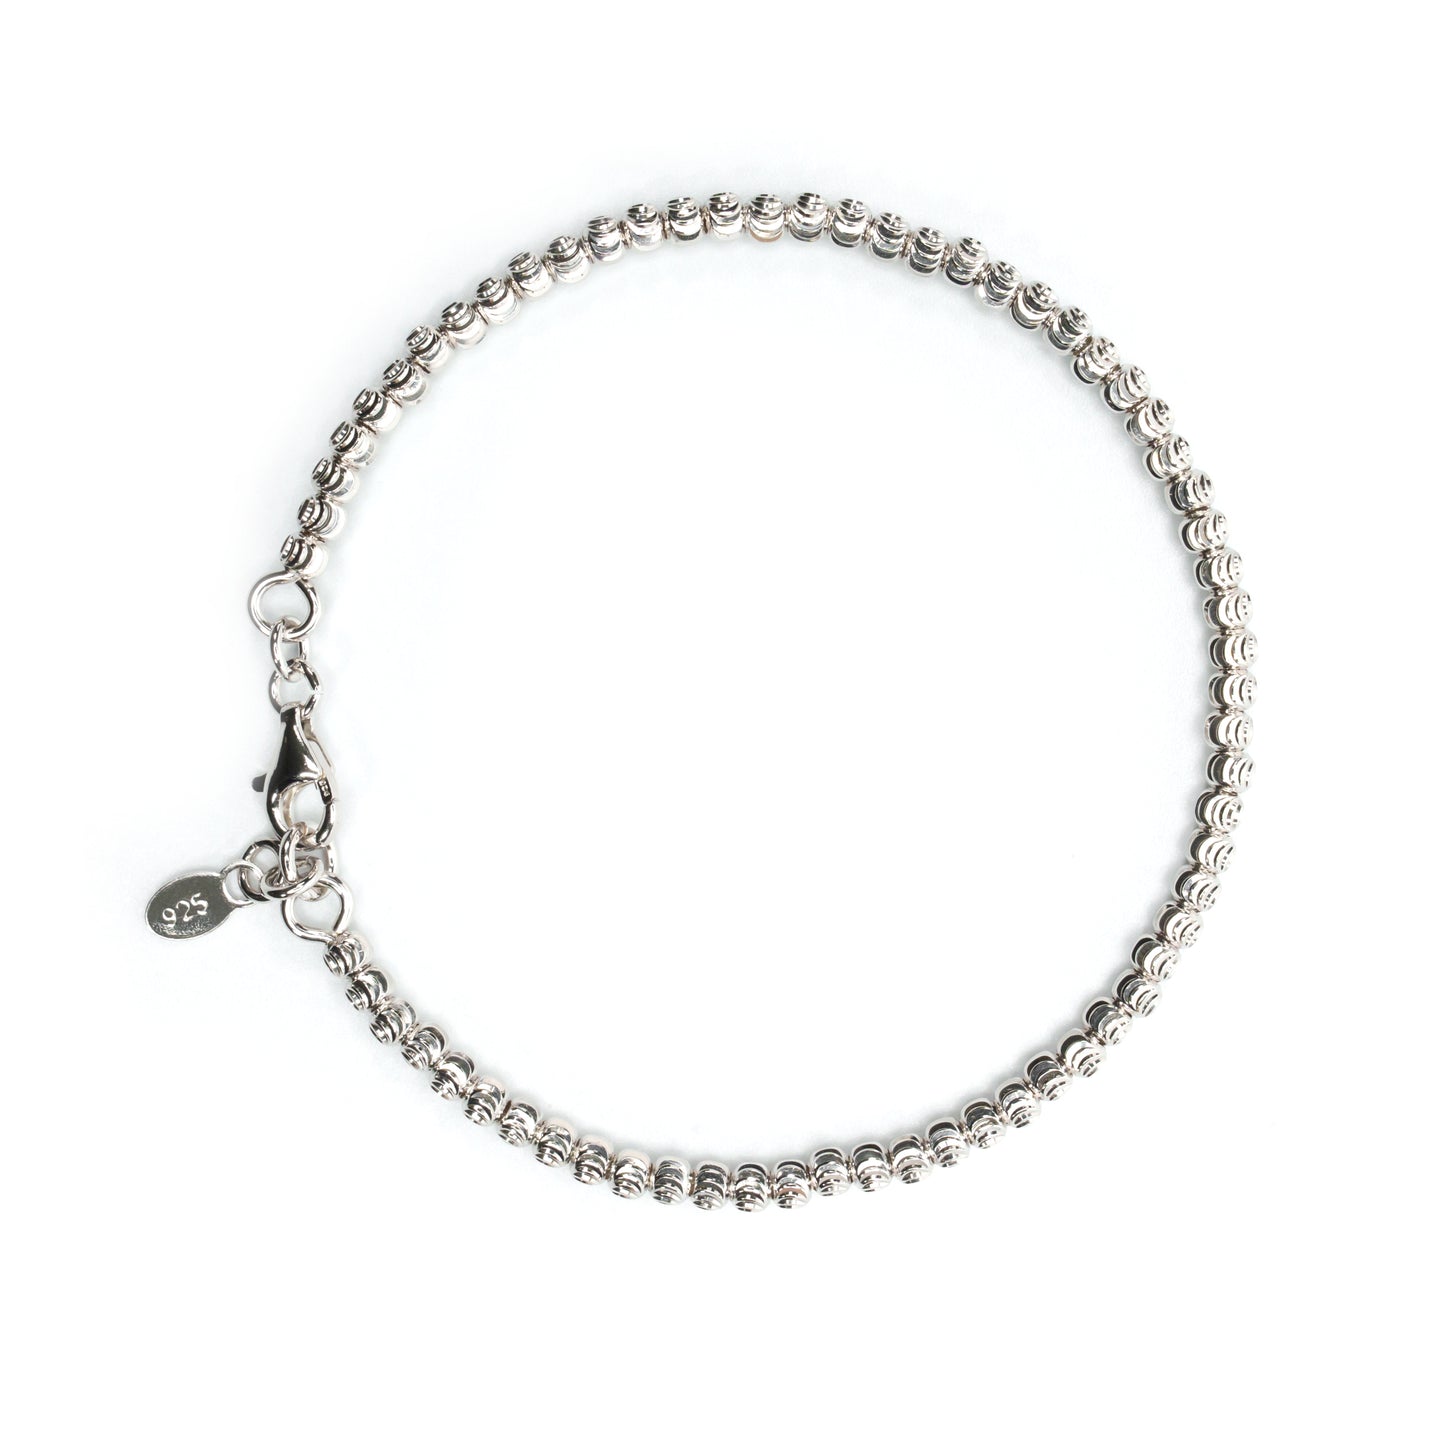 Sterling silver bracelet, 6 cm in diameter. Sparkling bracelet that sparkles like a diamond.